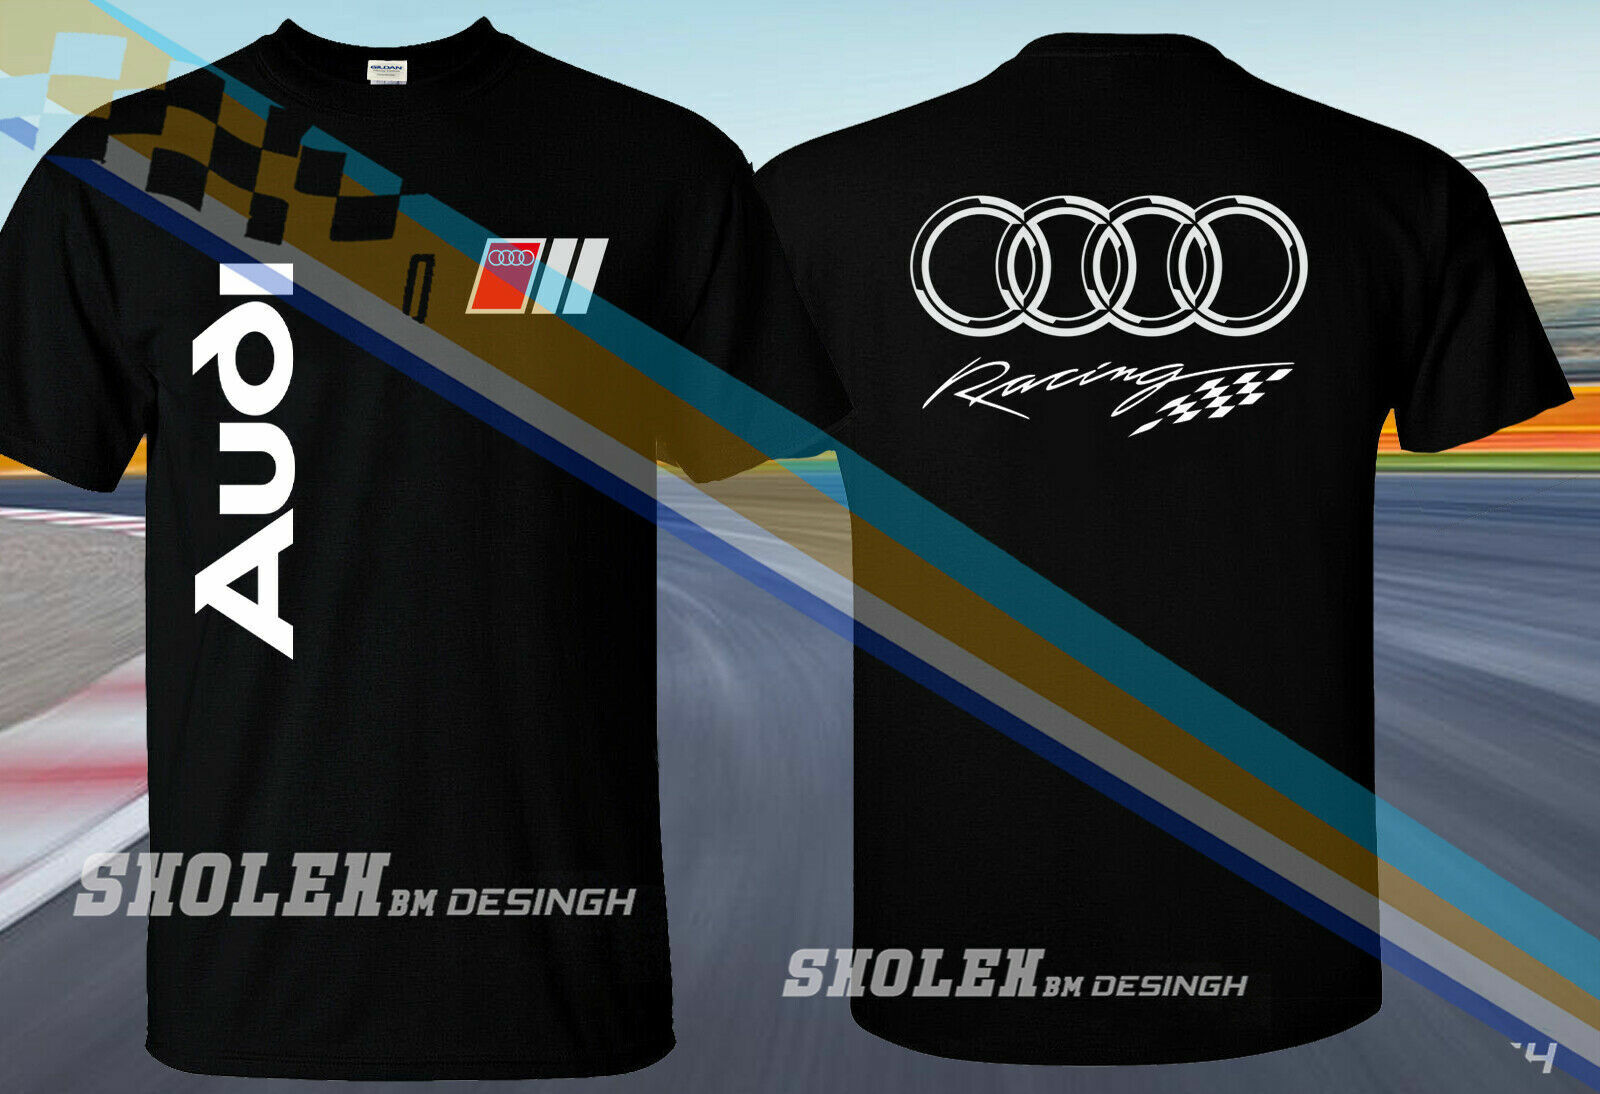 Picasso klamre sig Generel New Audi Sport Racing Mechanic TT T-Shirt SIZE S TO 5XL | eBay